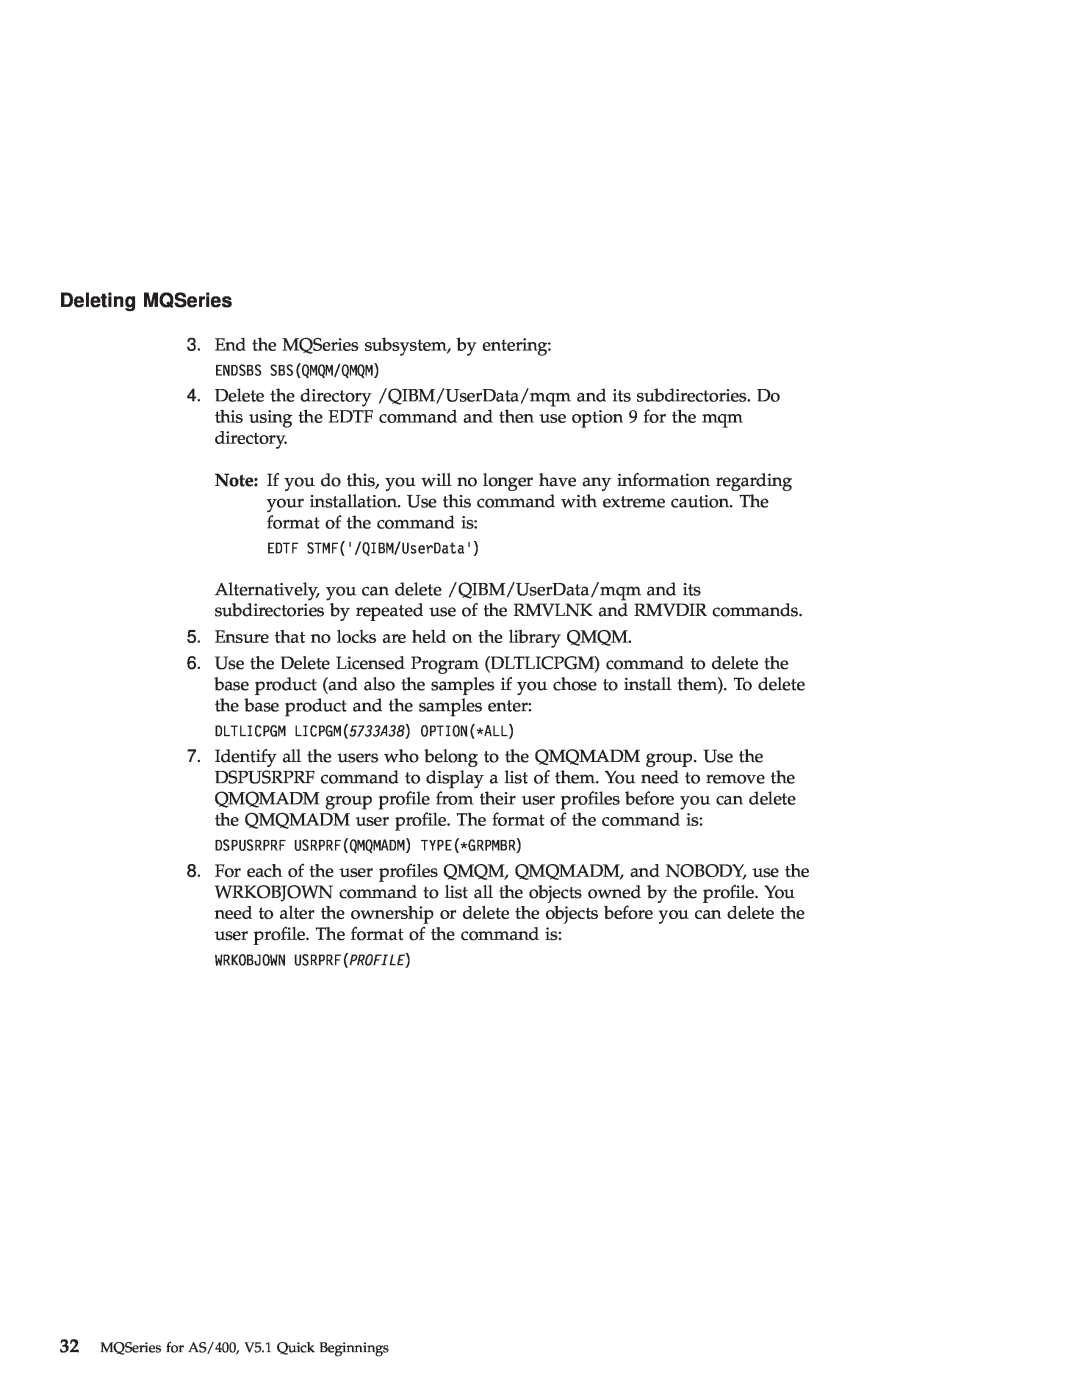 IBM GC34-5557-00 manual Deleting MQSeries 